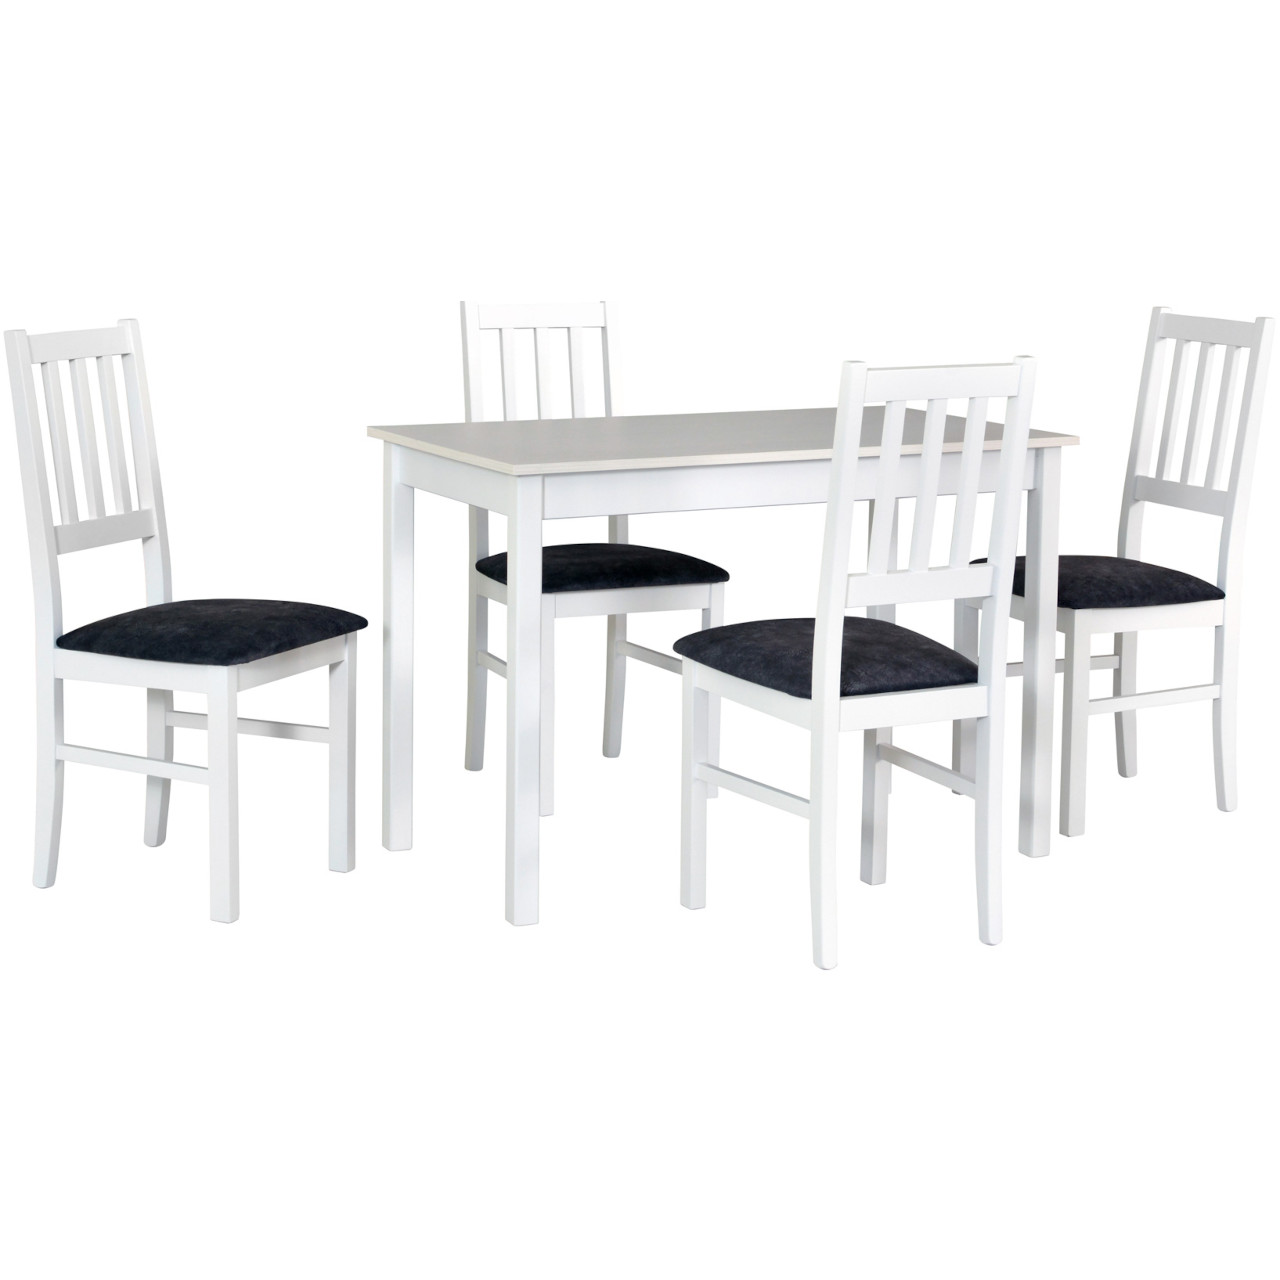 Table MAX 2 white laminate + chairs BOS 4 (4 pcs.) white / 24B